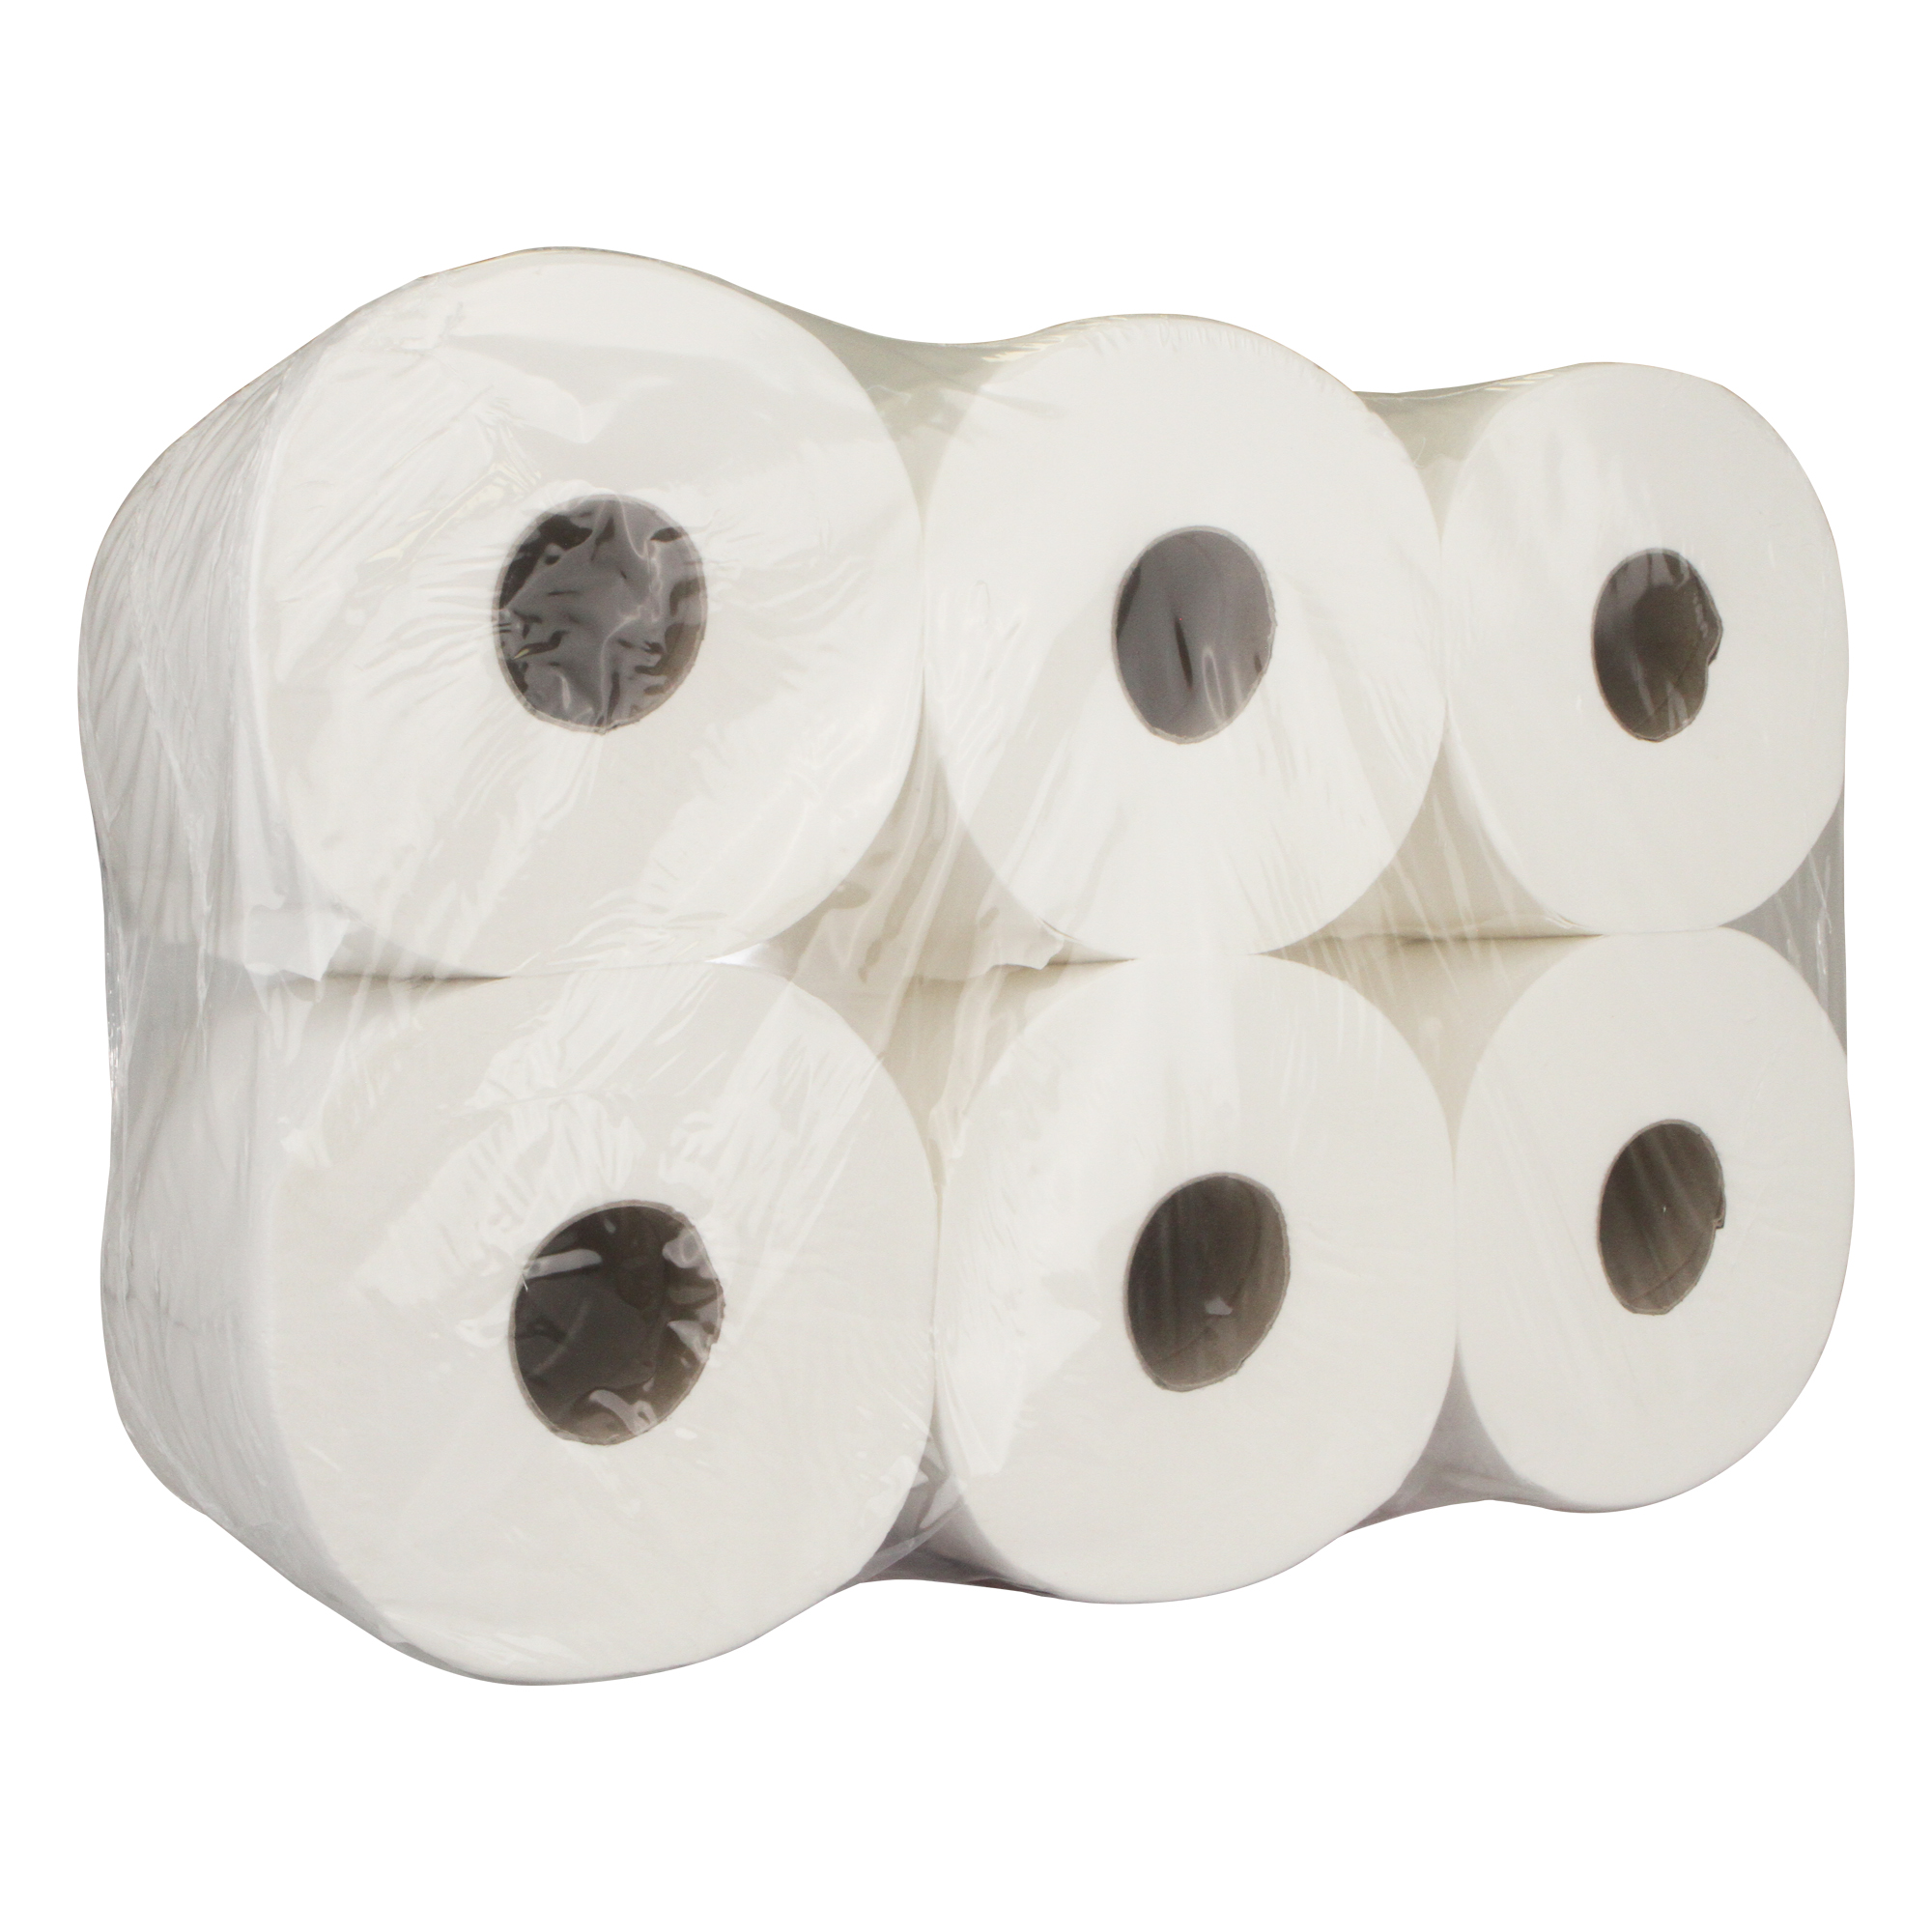 12 x Mini Jumbo Toilettenpapier. 2-lagiges, hochweißes Toilettenpapier aus 100 % Zellstoff für Jumbo Toilettenpapierspender. Blattbreite 9,5 cm und Blattlänge 14 cm.